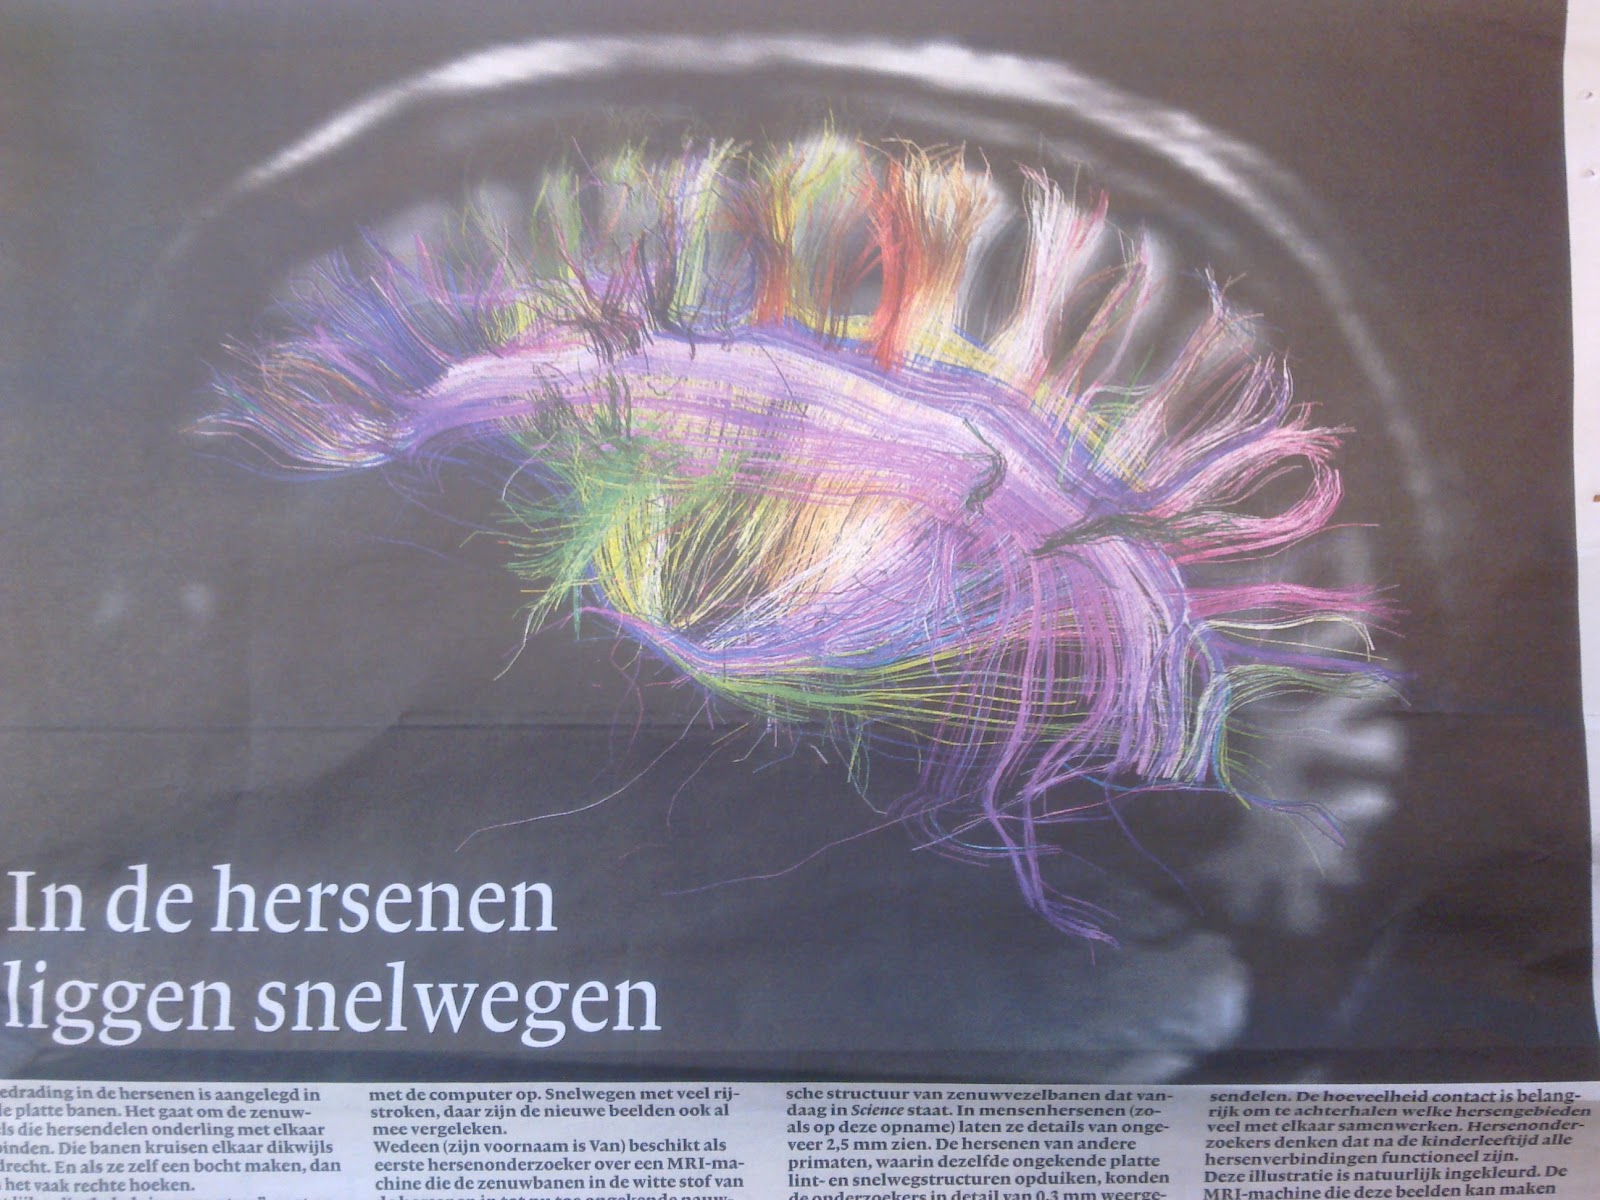 ... Van Wedeen (NIMH) made this MRI-scan (NRC Handelsblad 30 March 2012